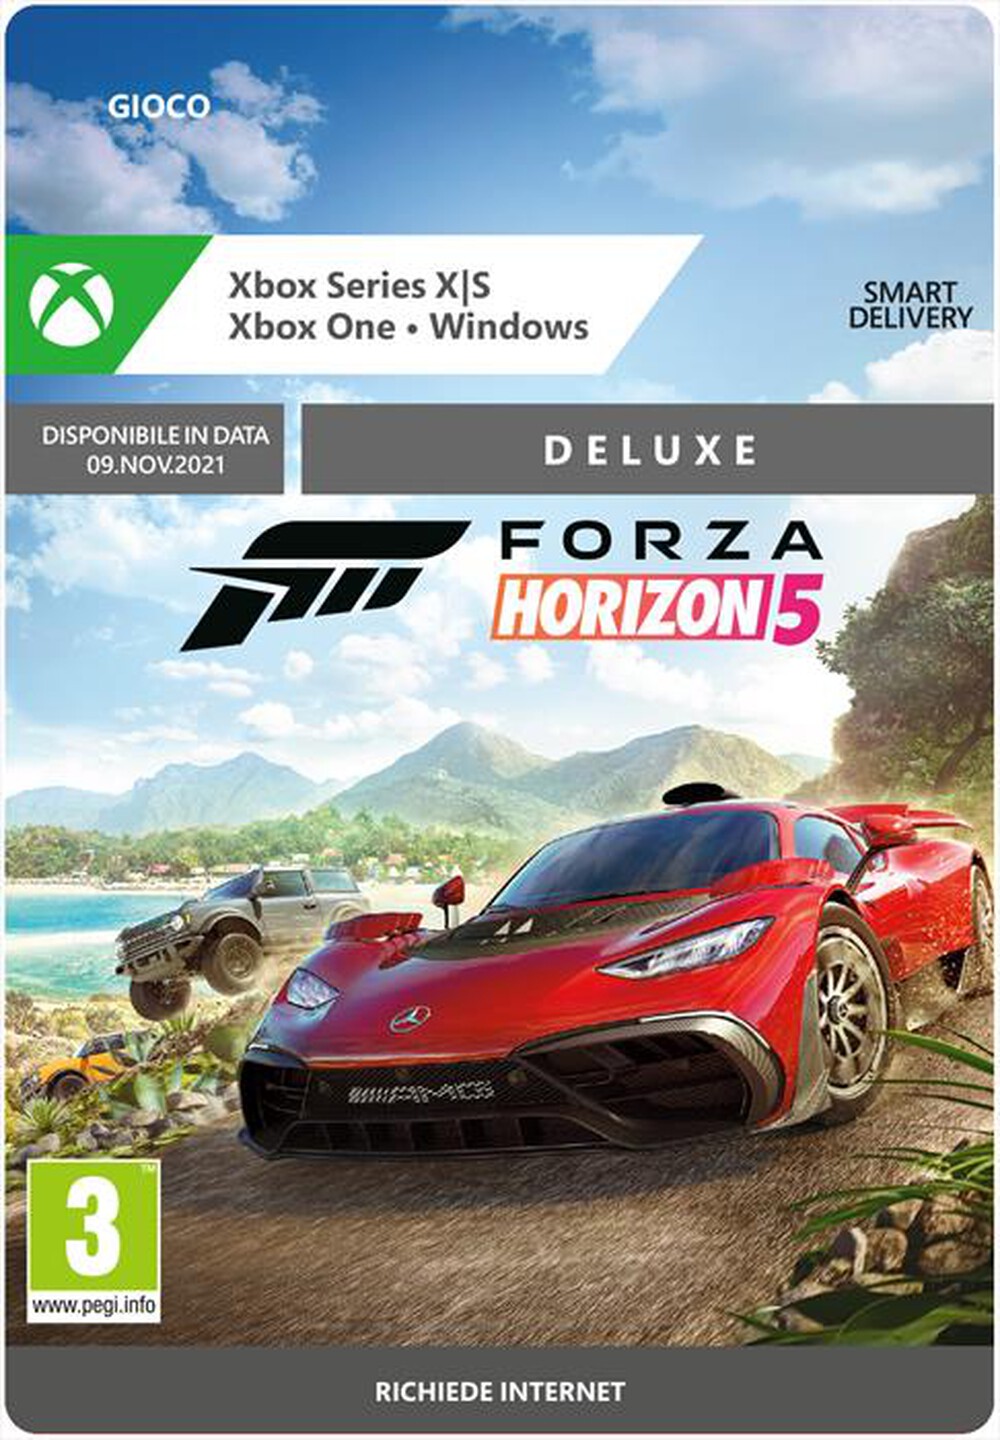 "MICROSOFT - Forza Horizon5 Deluxe Edition - "